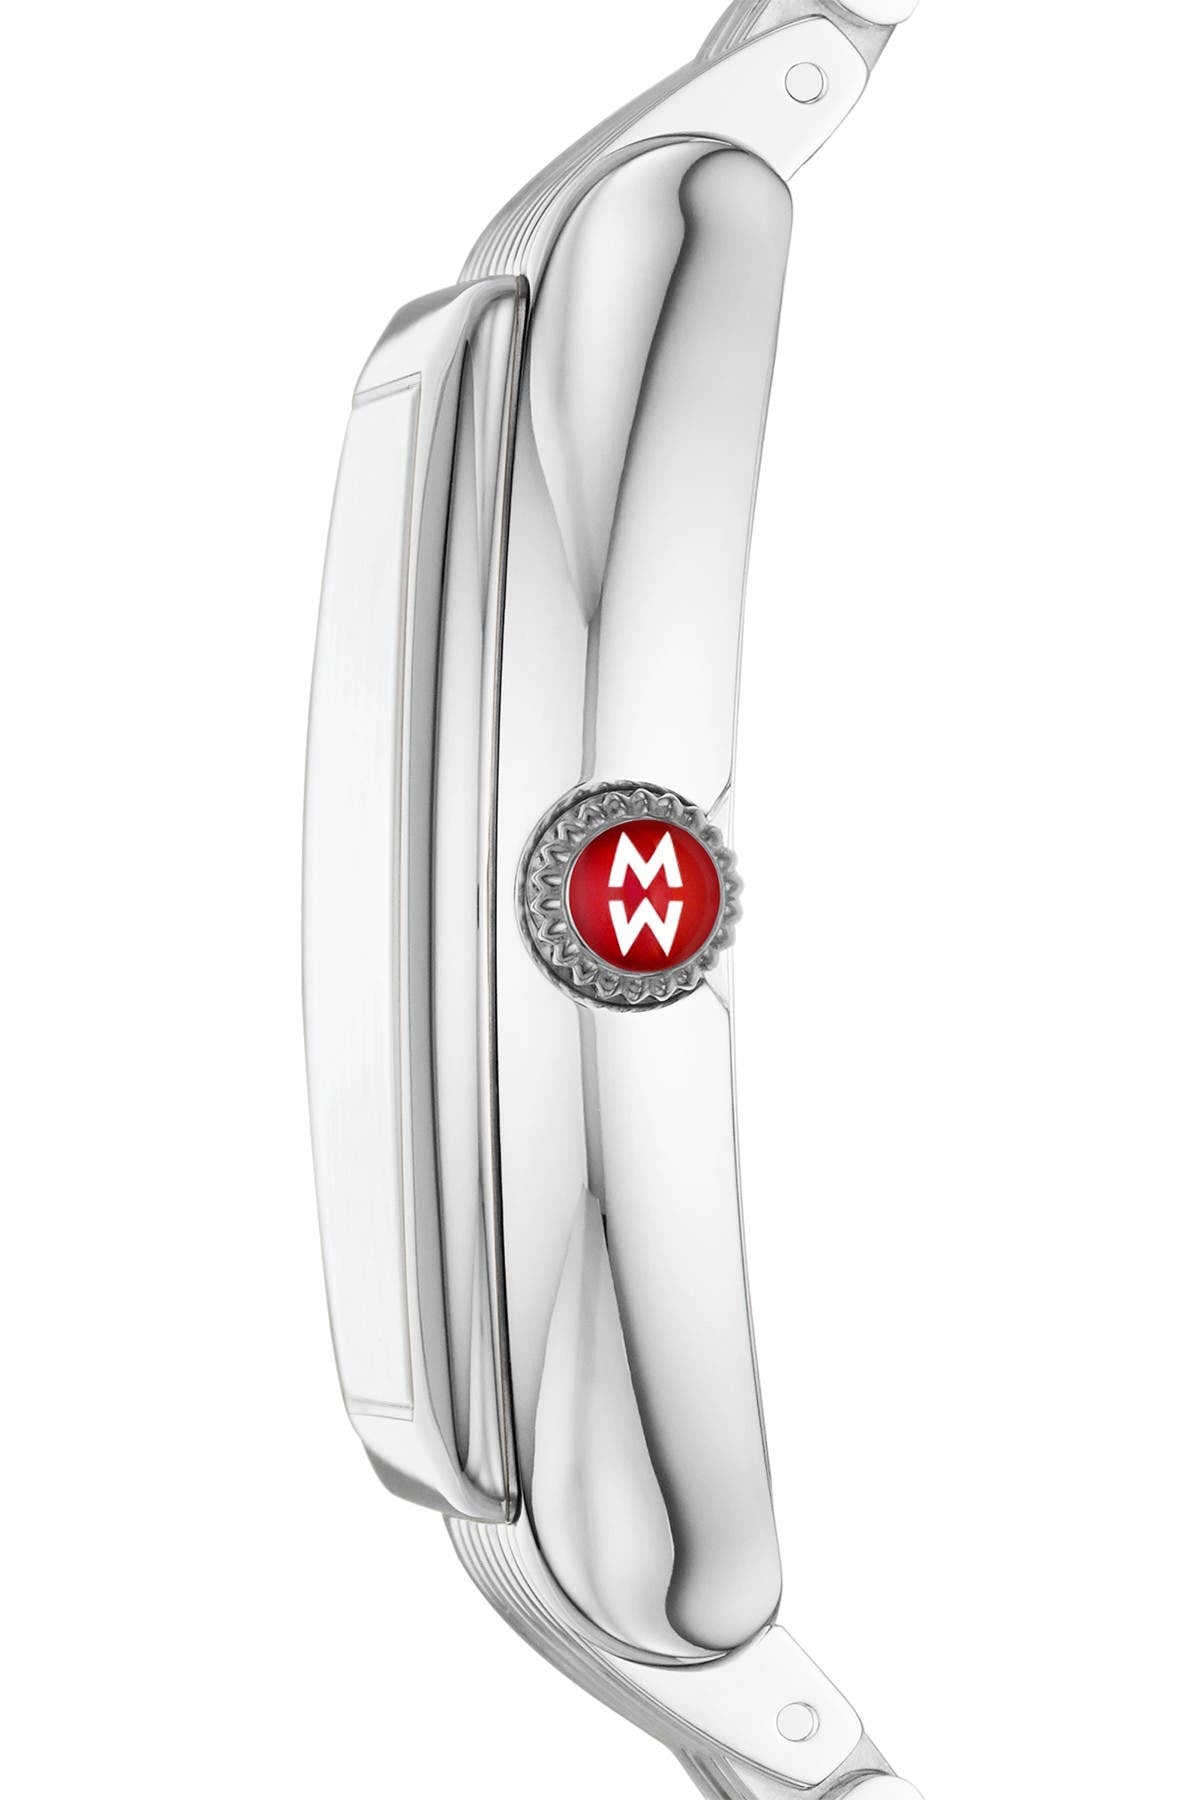 MICHELE Women's Releve Diamond Bracelet Watch, 31mm x 40mm - 0.19 ctw, Main, color, 000